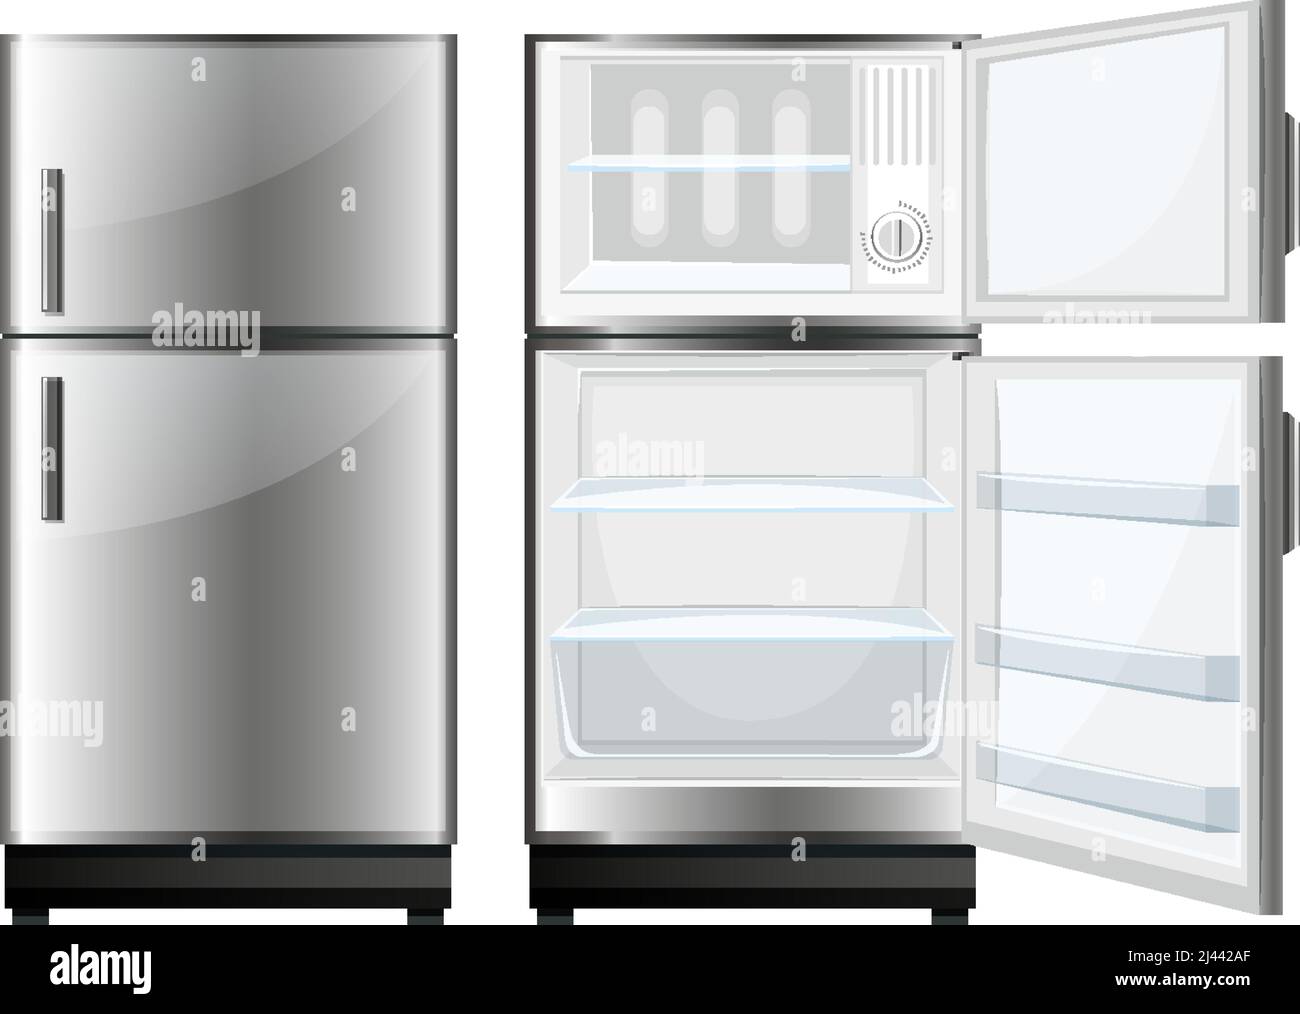 Empty refrigerator with opened door illustration Stock Vector